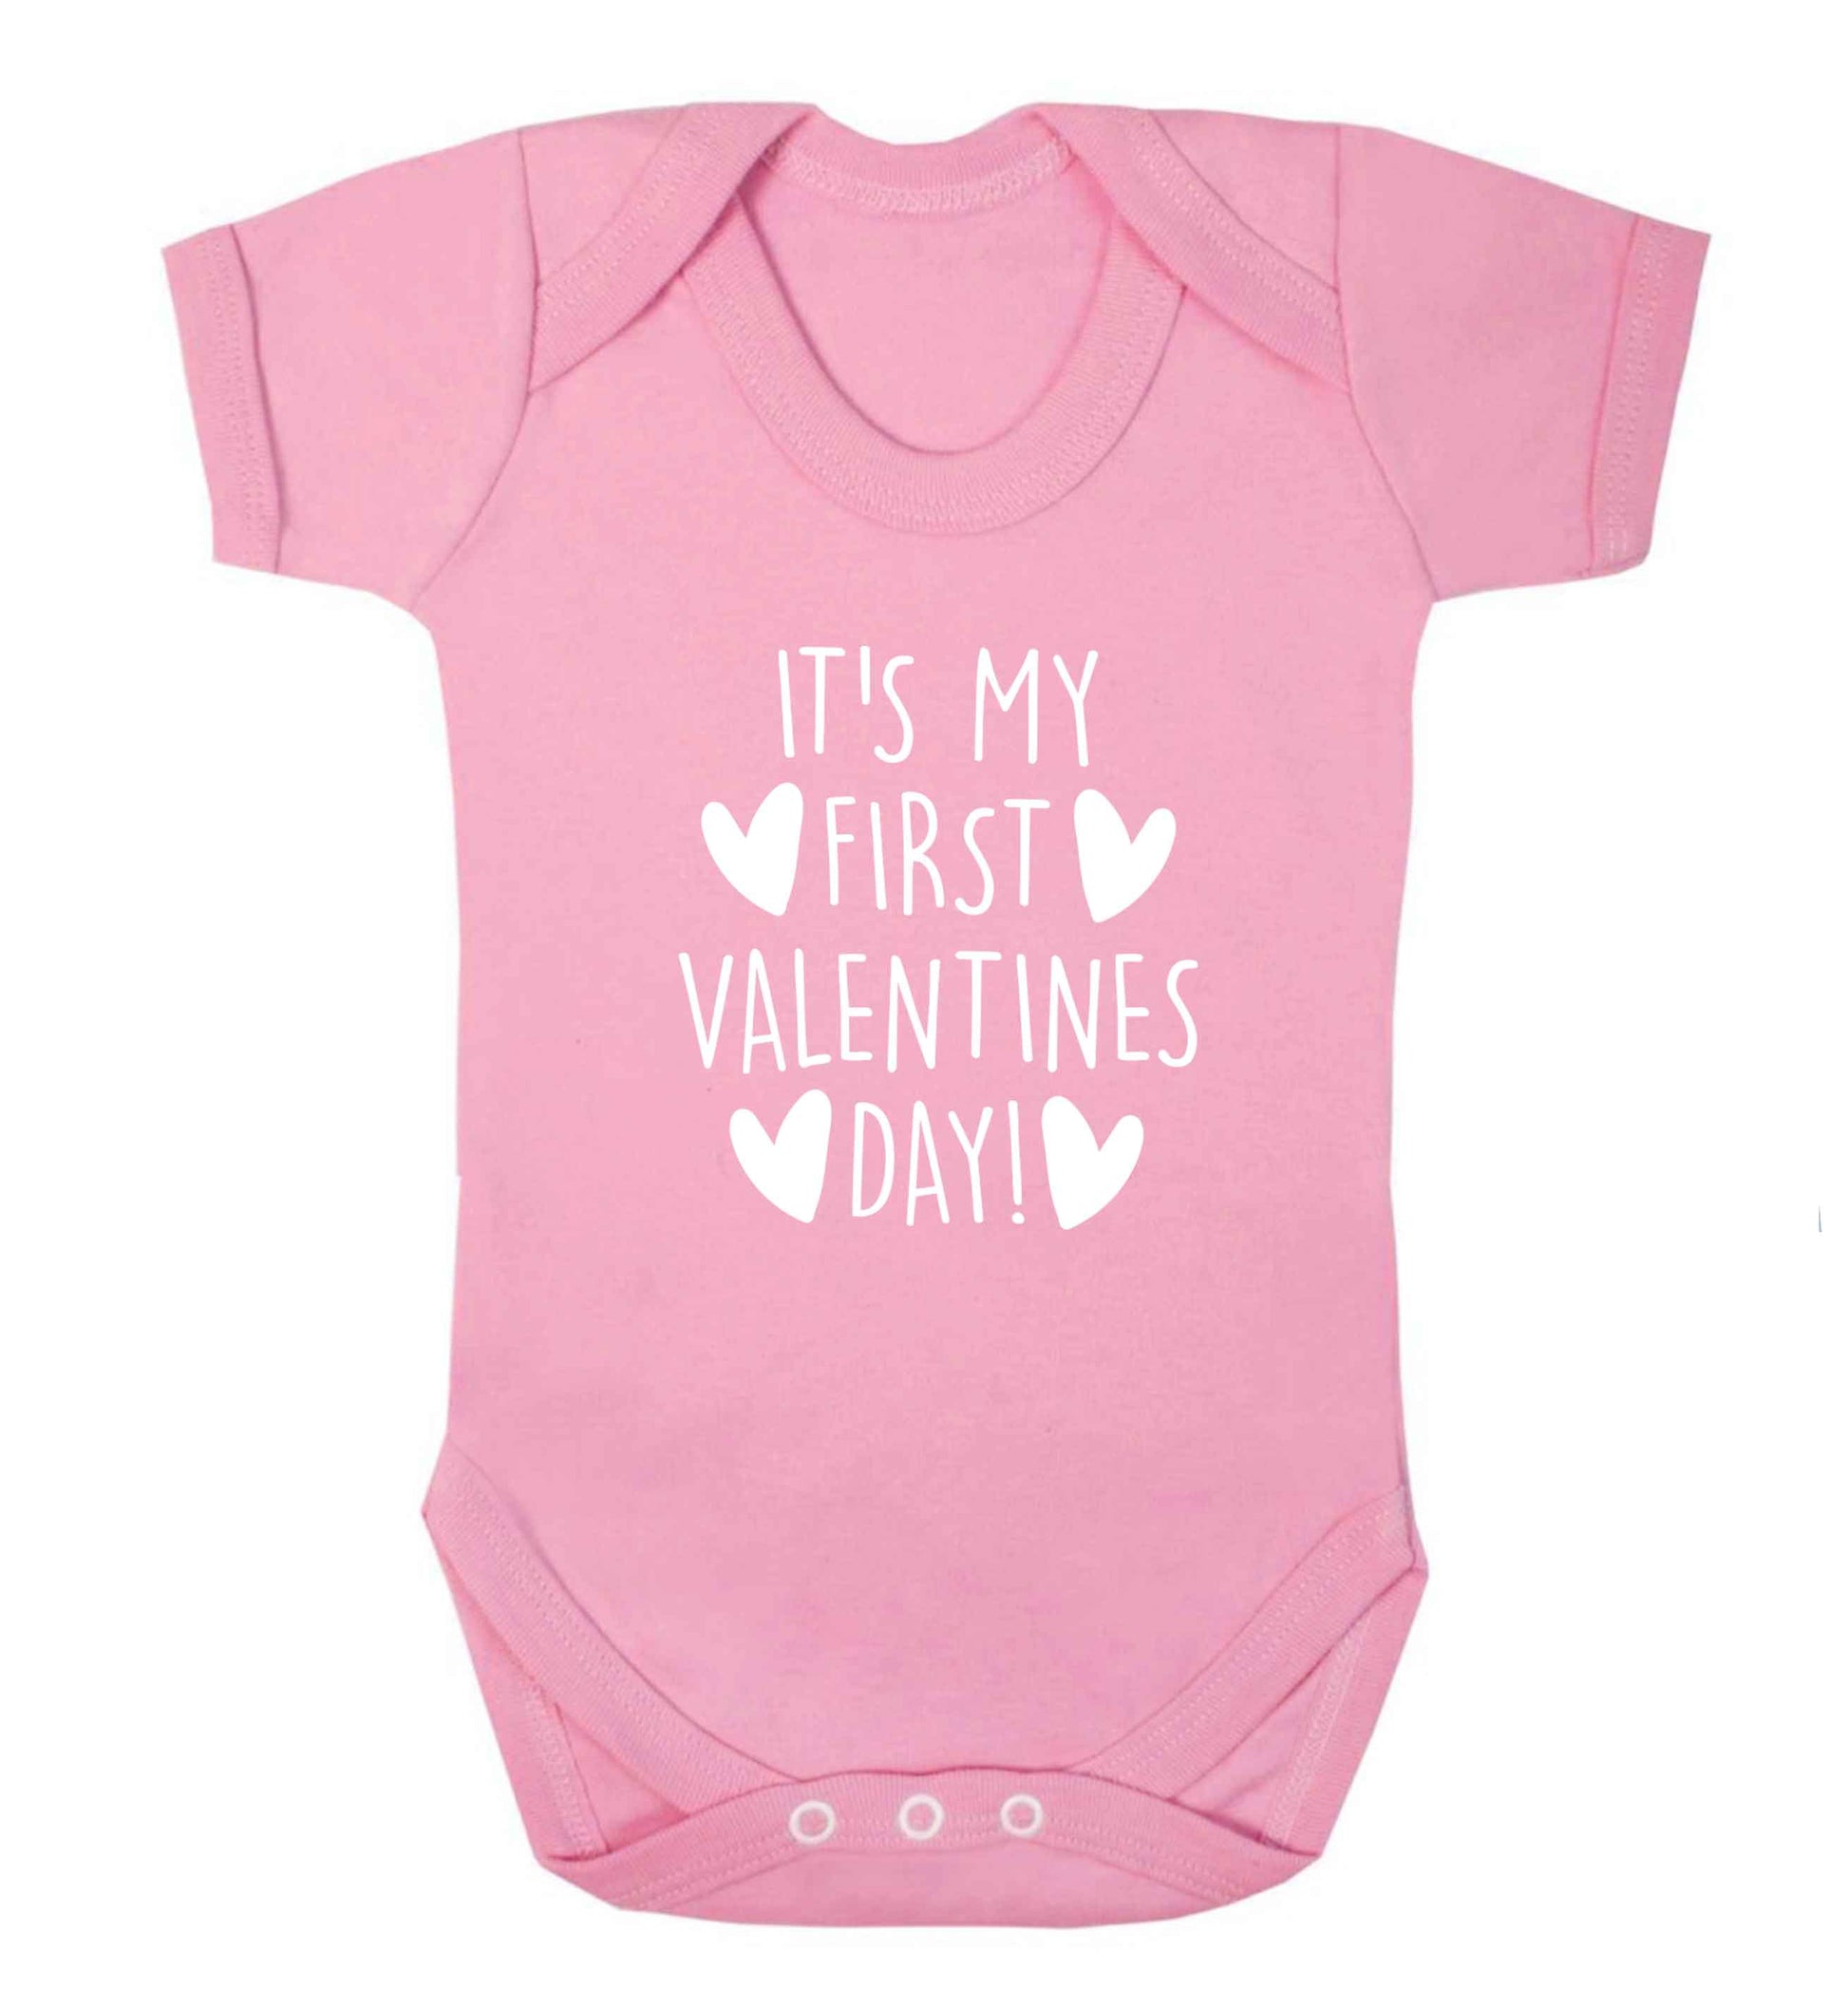 It's my first valentines day! baby vest pale pink 18-24 months